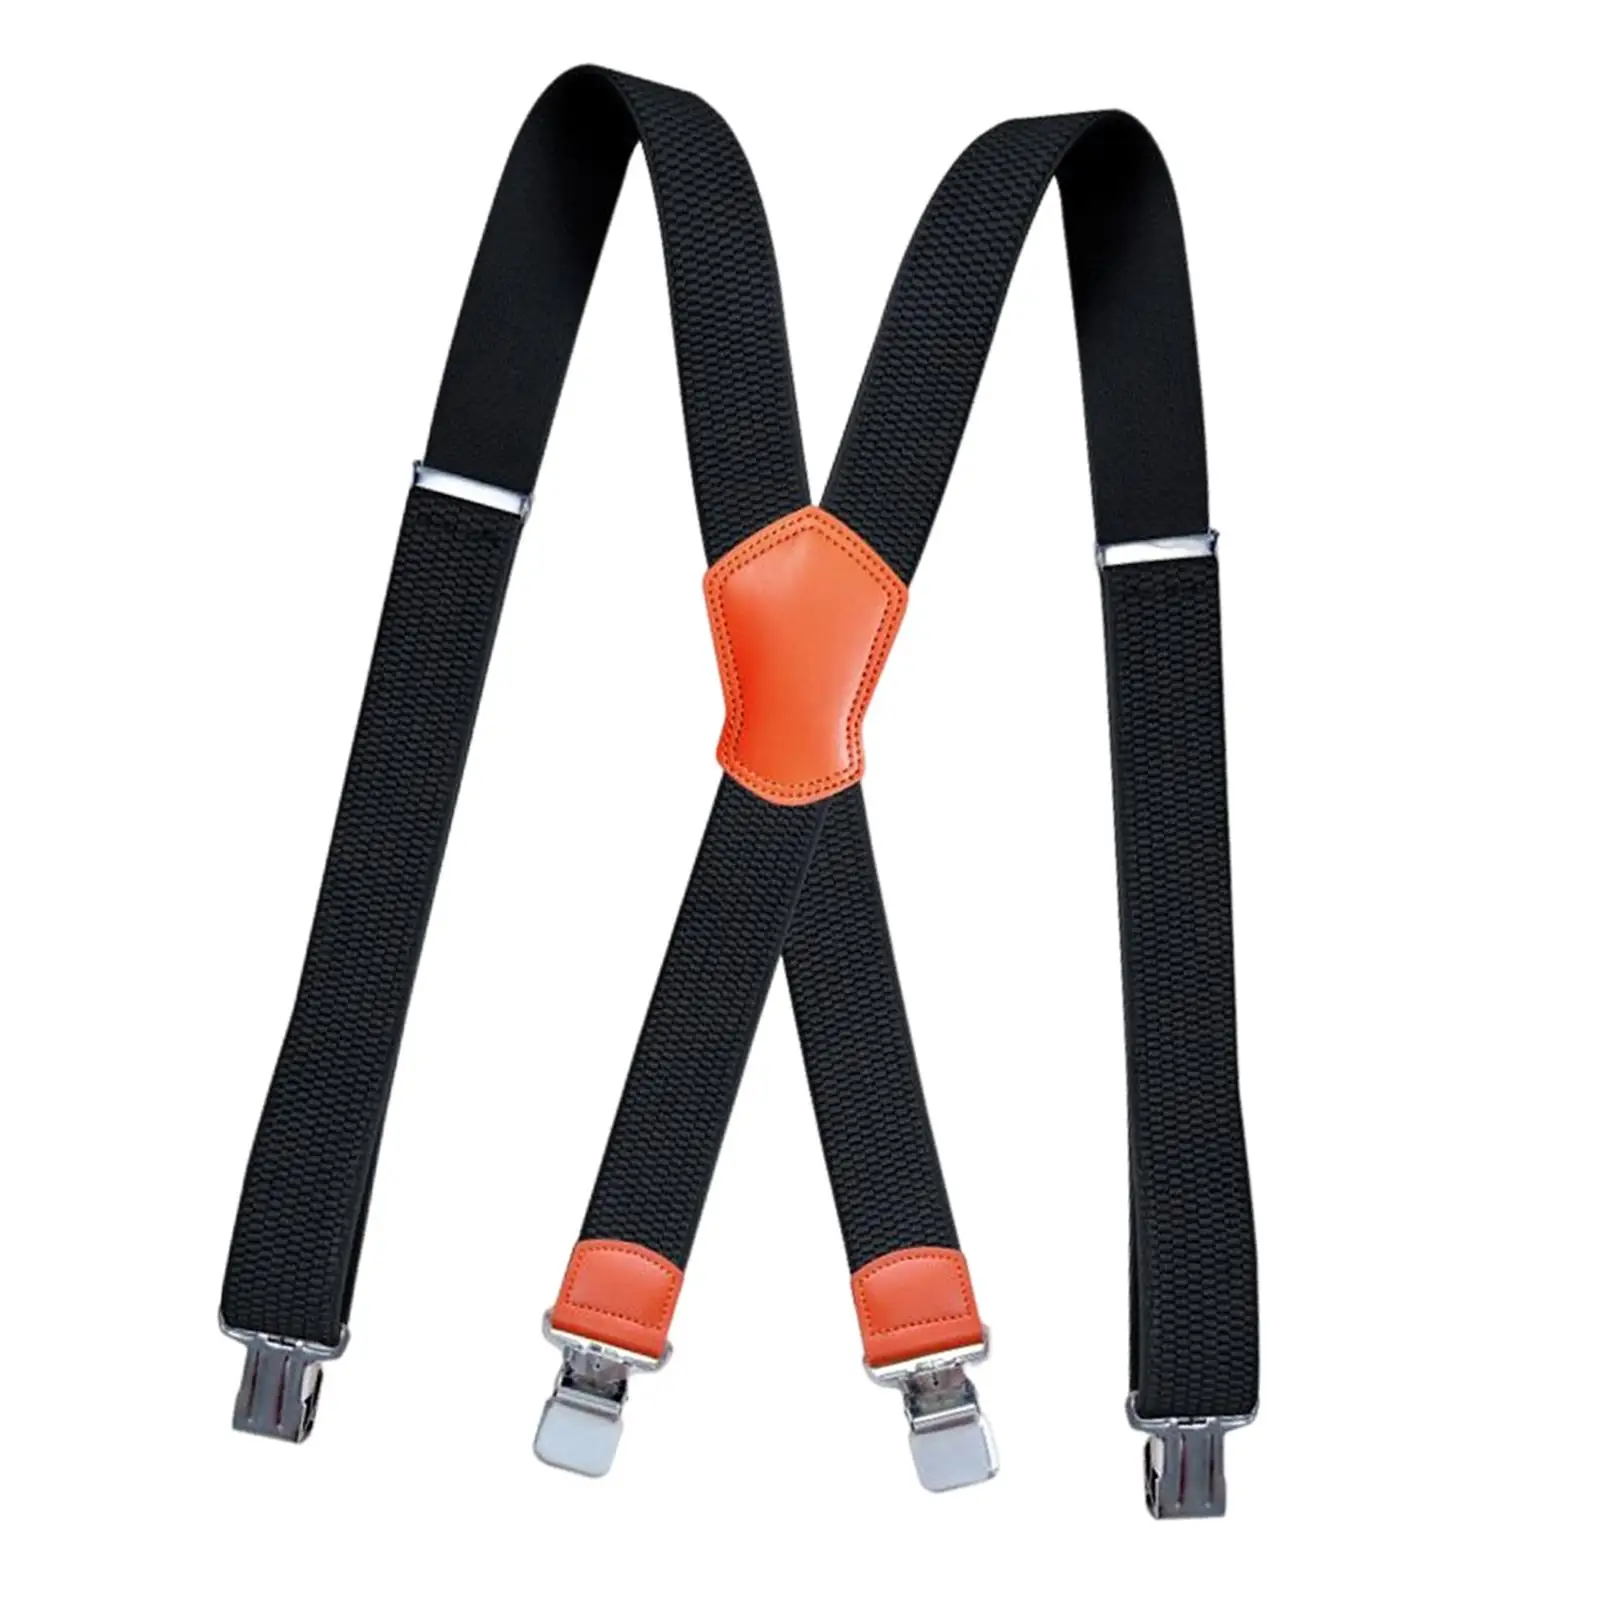 Suspender for Men, X Shaped Construction Elastic Wide Suspenders Adjustable